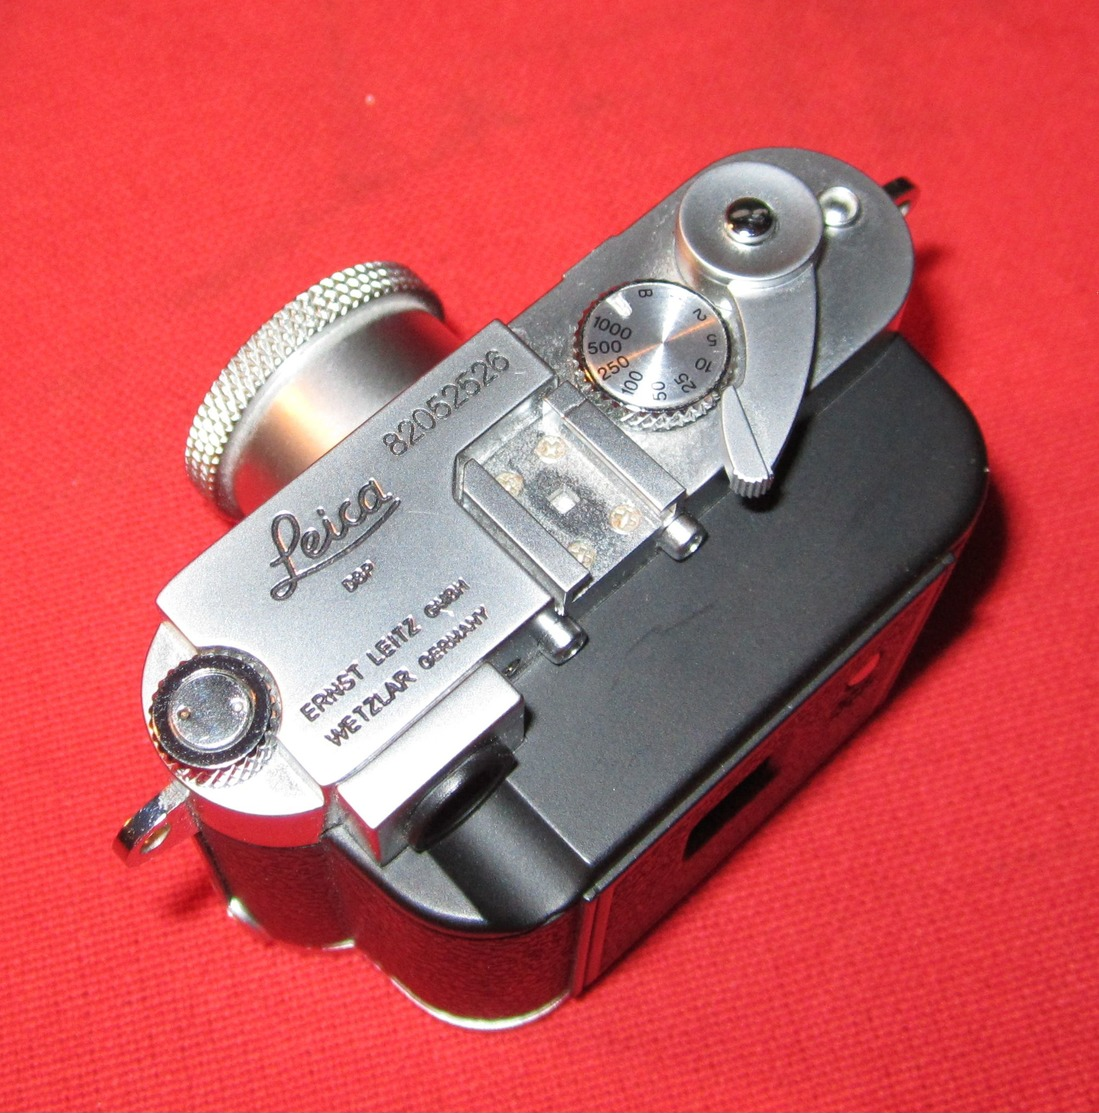 MINOX Digital Classic Camera Leica M3 4.0MP - Cámaras Fotográficas